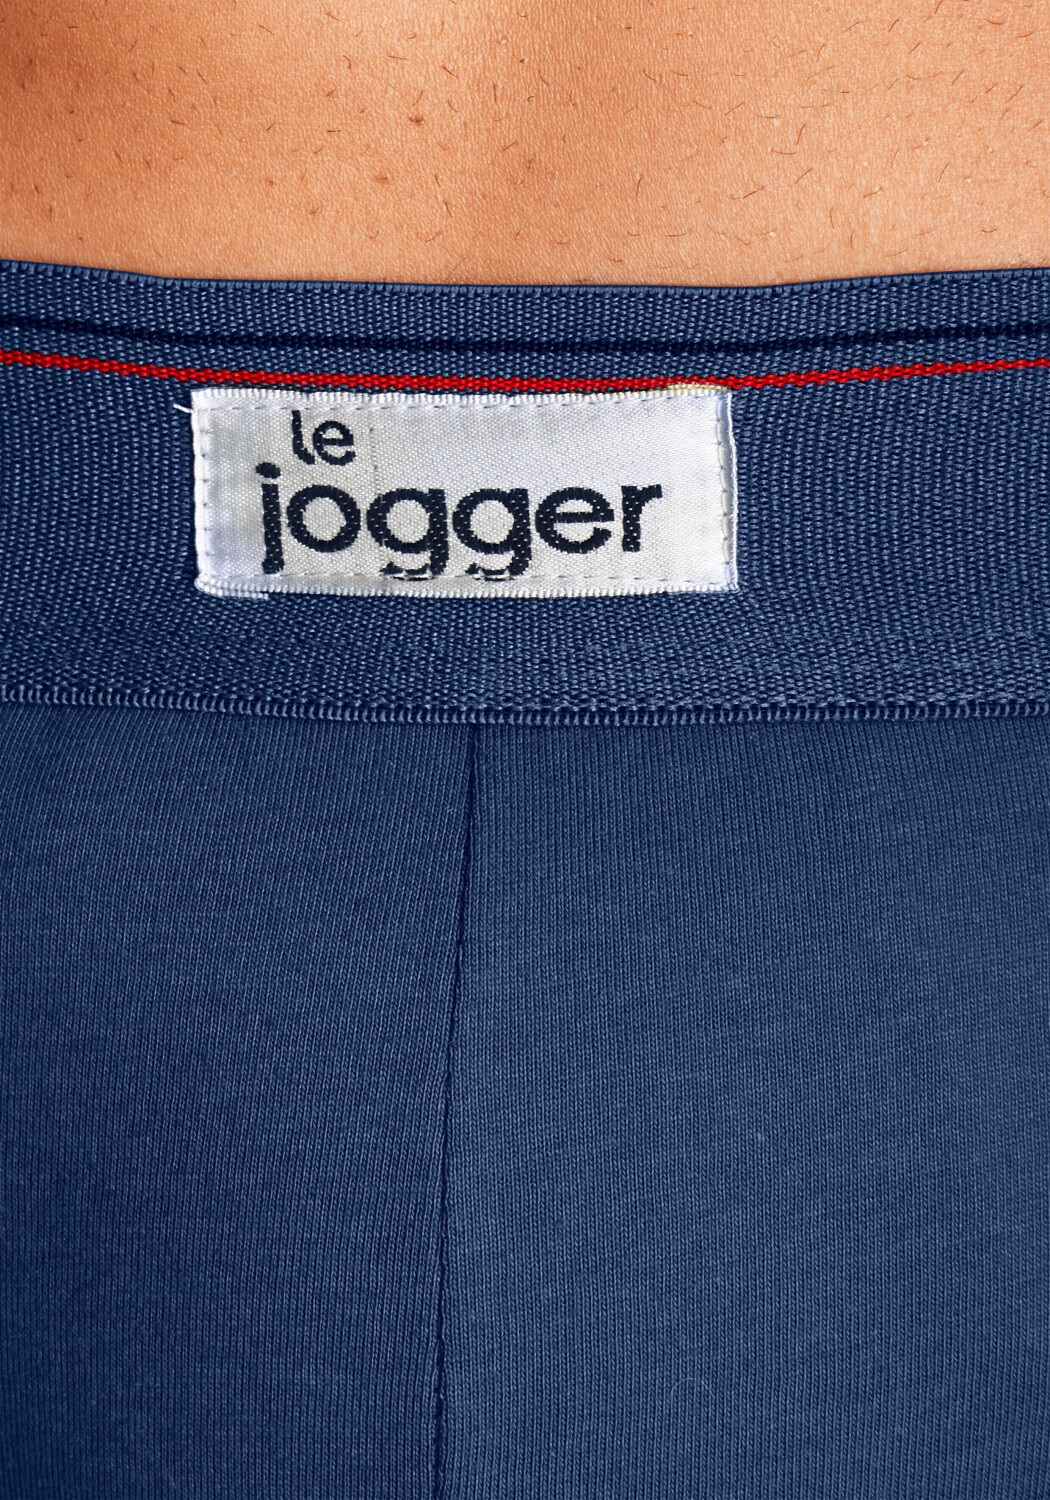 Le Jogger 10-Pack Slips 27,00 ab € bei | Preisvergleich multicolour